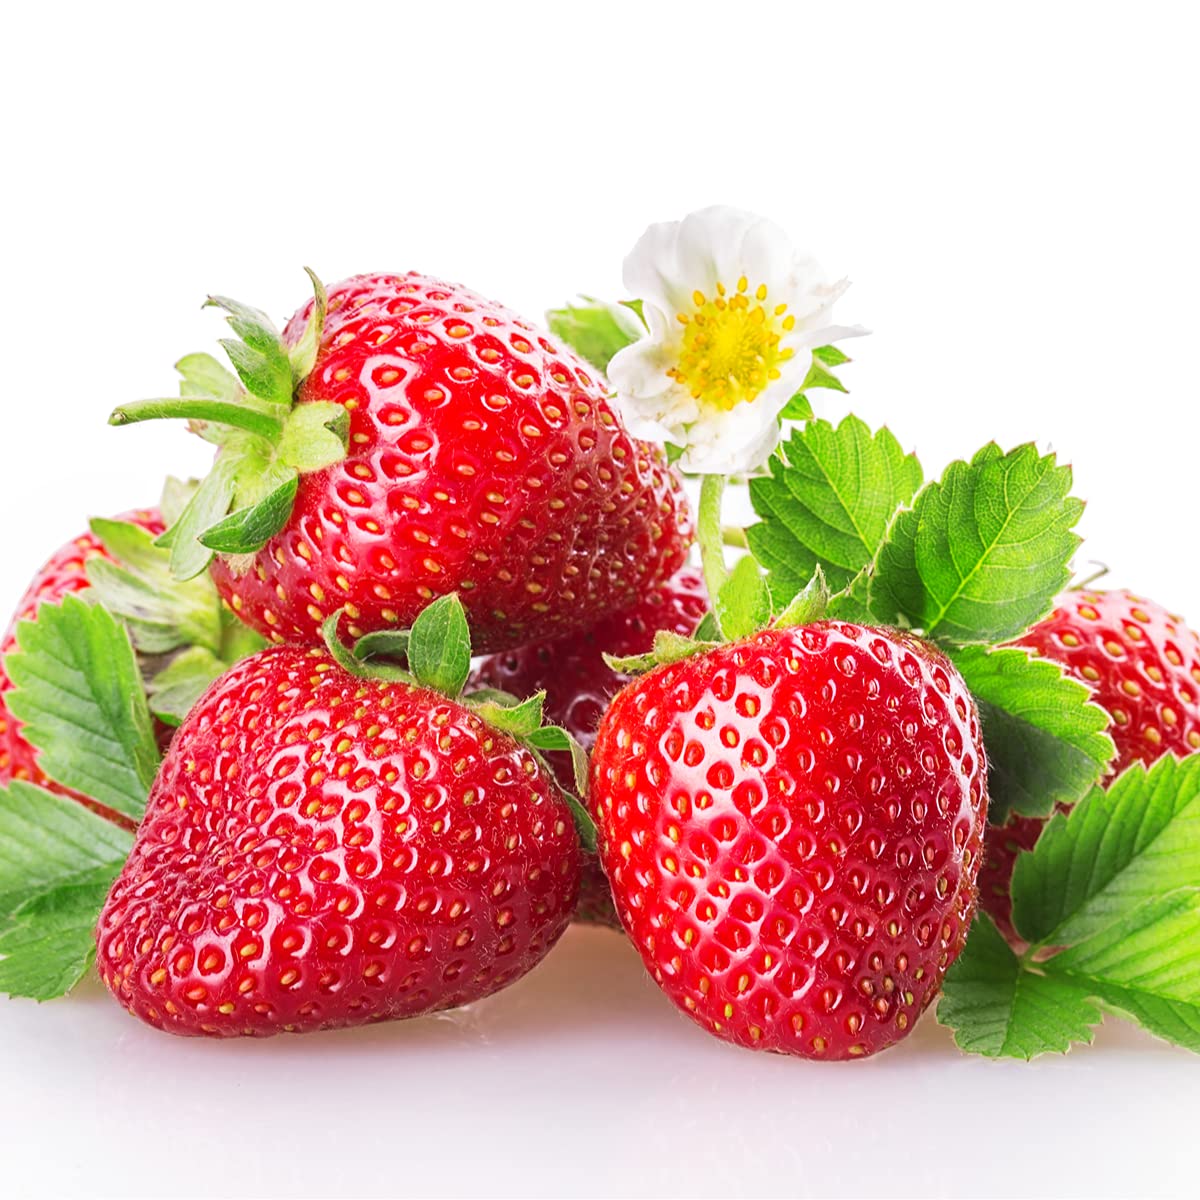 Strawberry Plants - 'Flamenco' - 6 x Full Plants in 9cm Pots - AcquaGarden